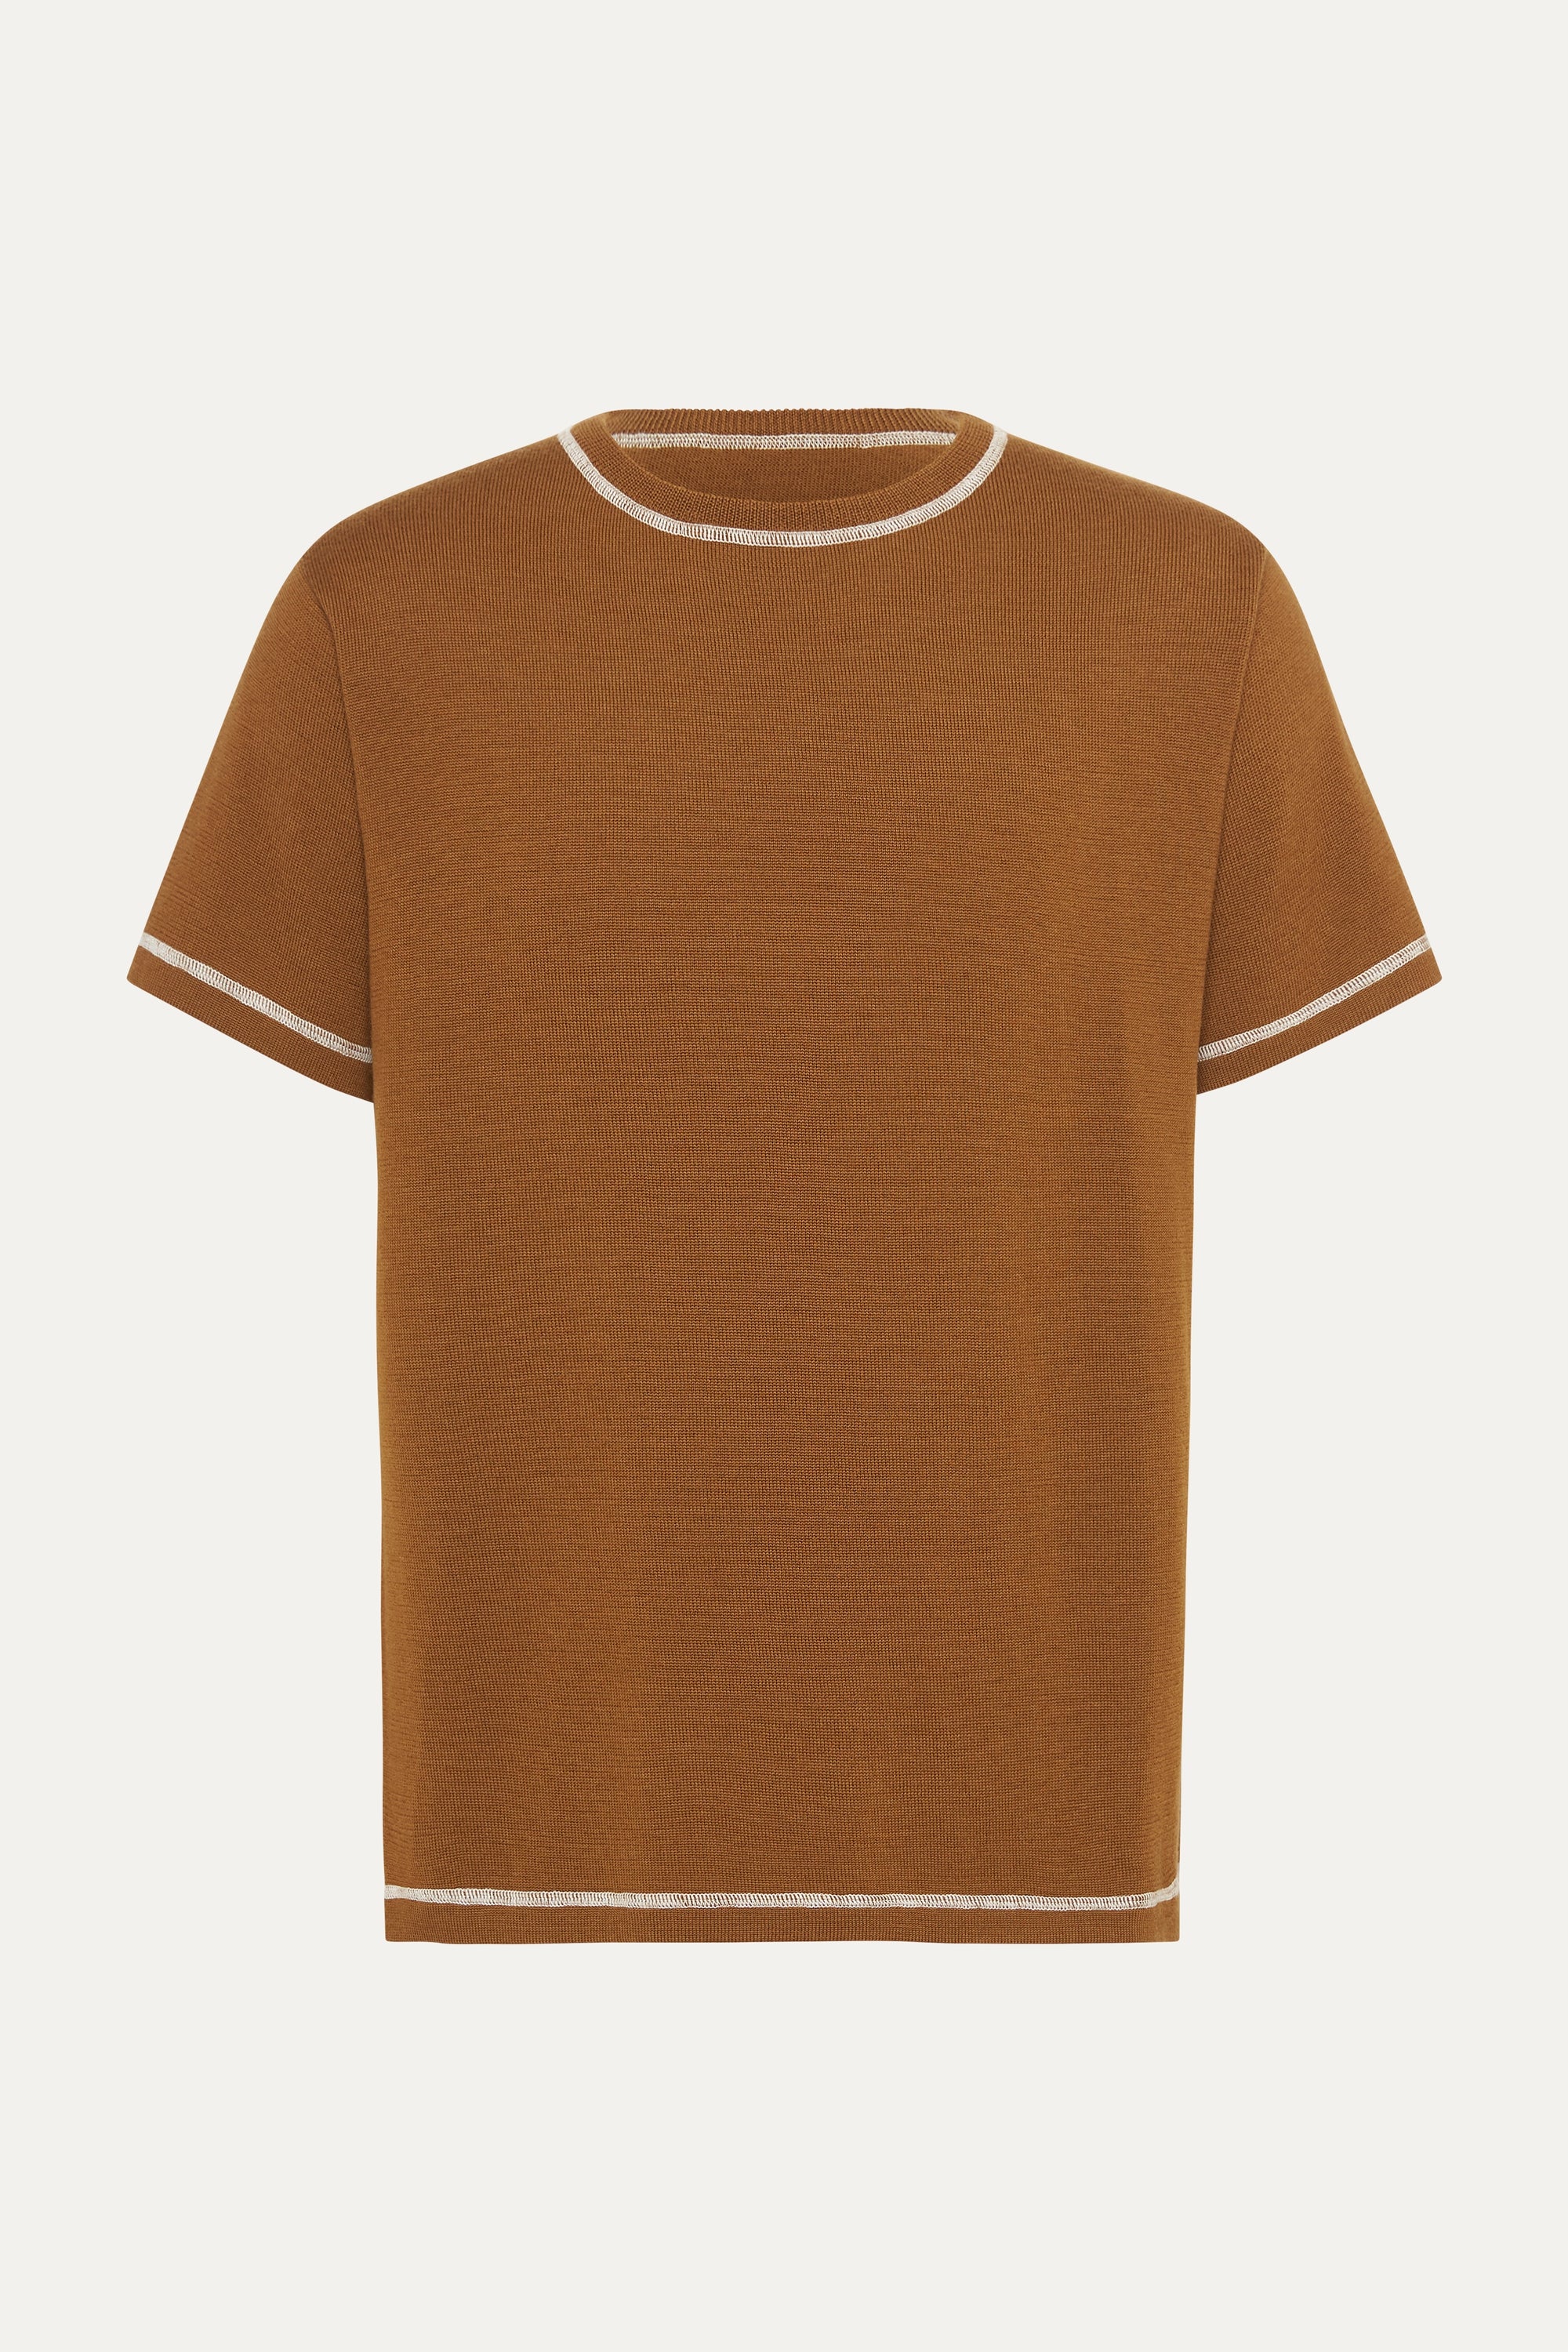 Merino Wool Deep Tan Contrast T-Shirt